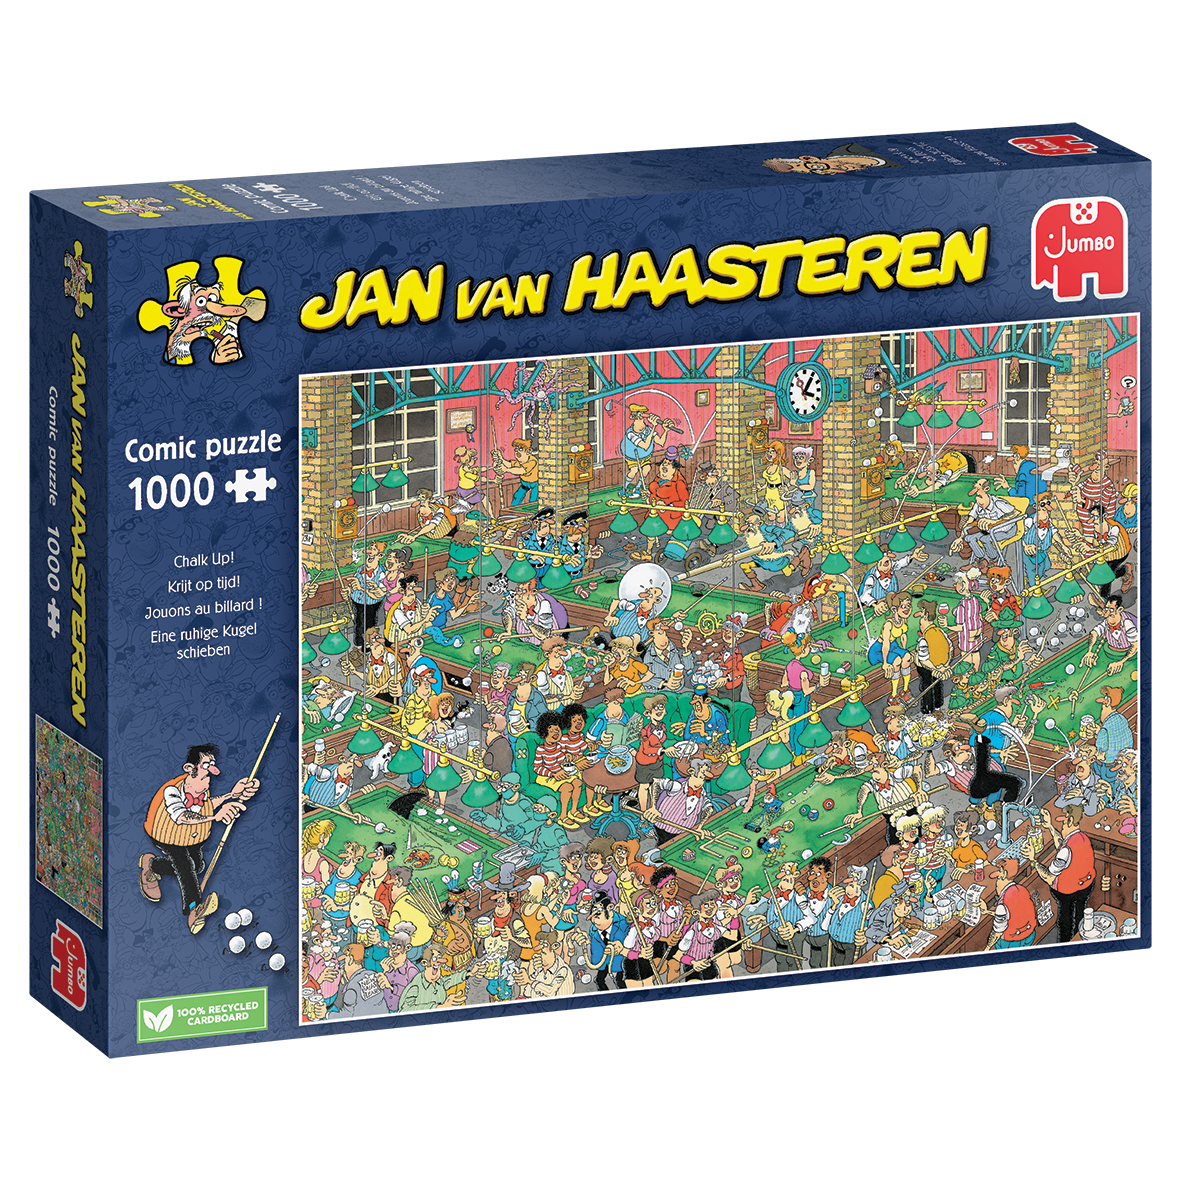 Jumbo Jan van Haasteren JvH Chalk up! 1000pcs